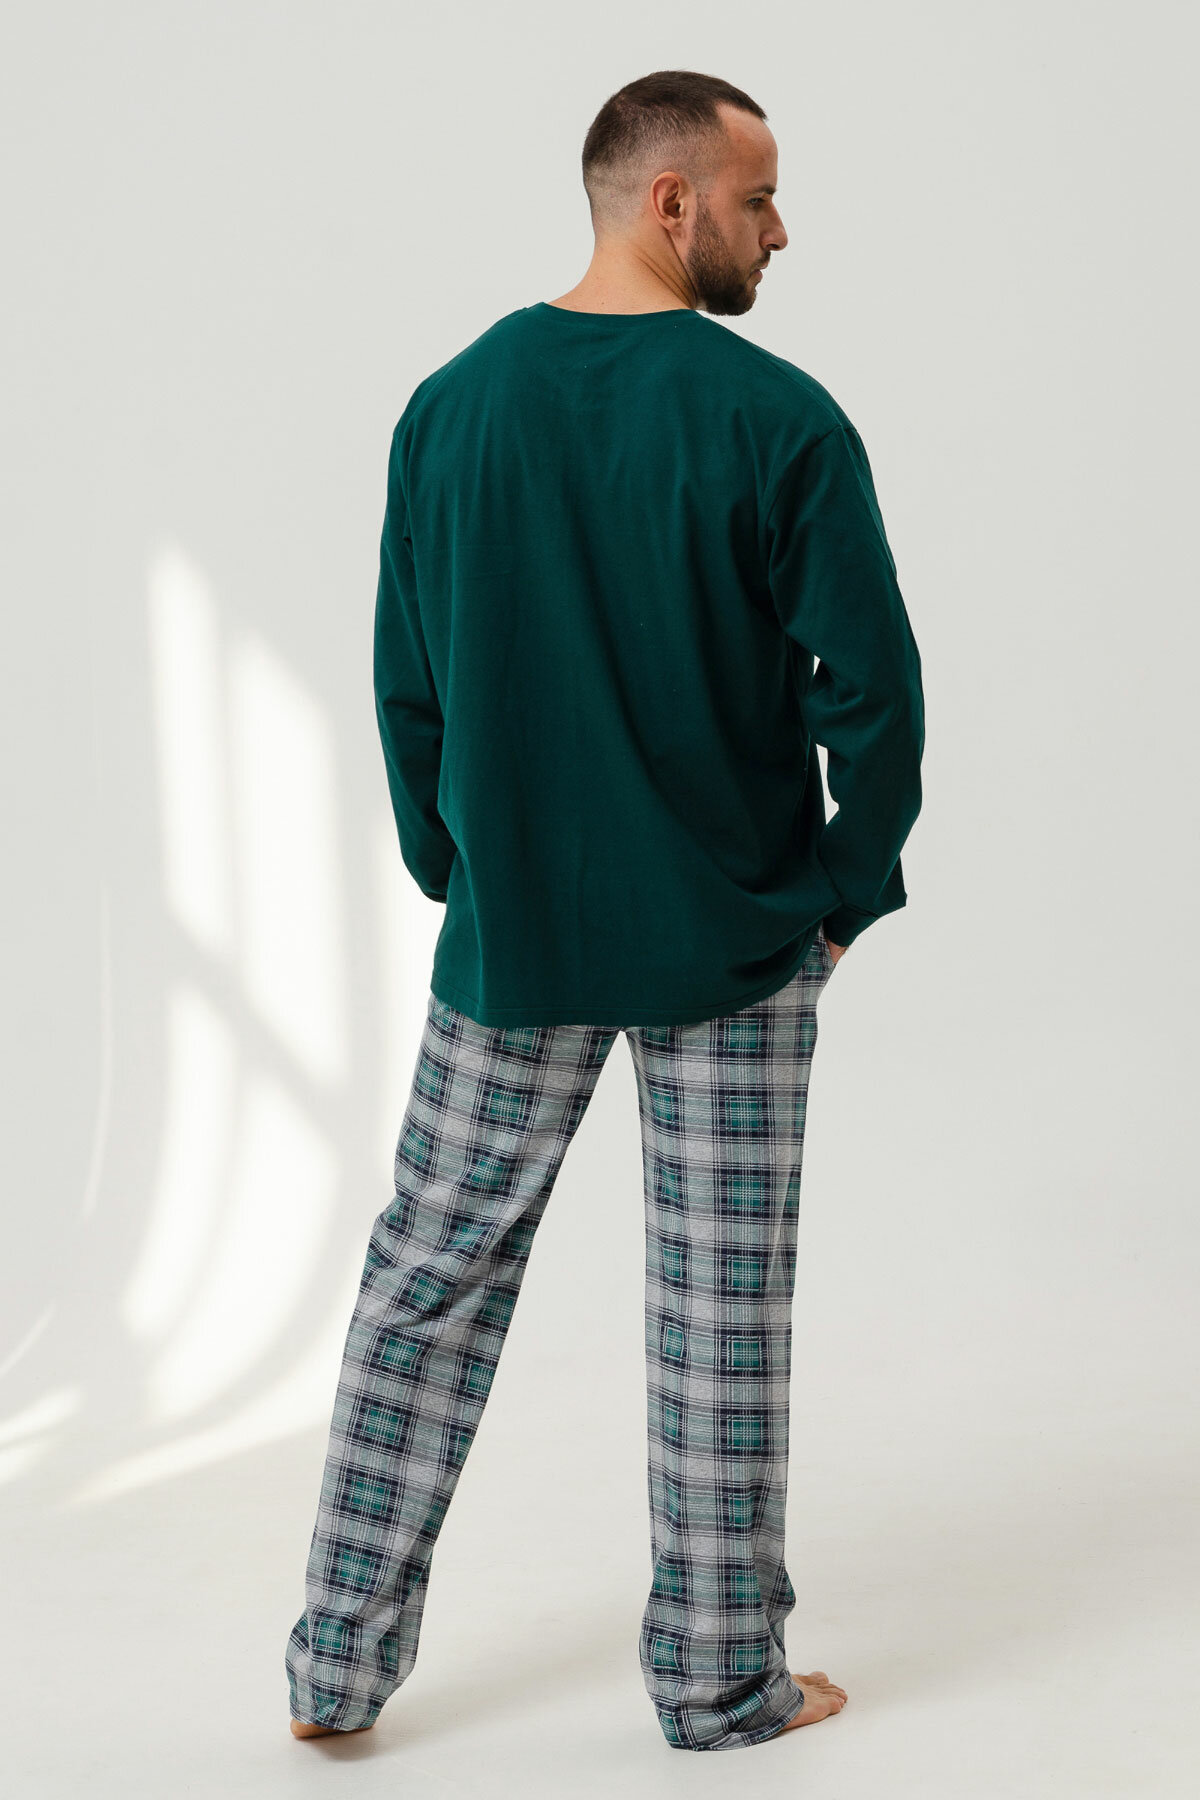 Пижама Оптима Трикотаж, размер 46, зеленый - фотография № 2